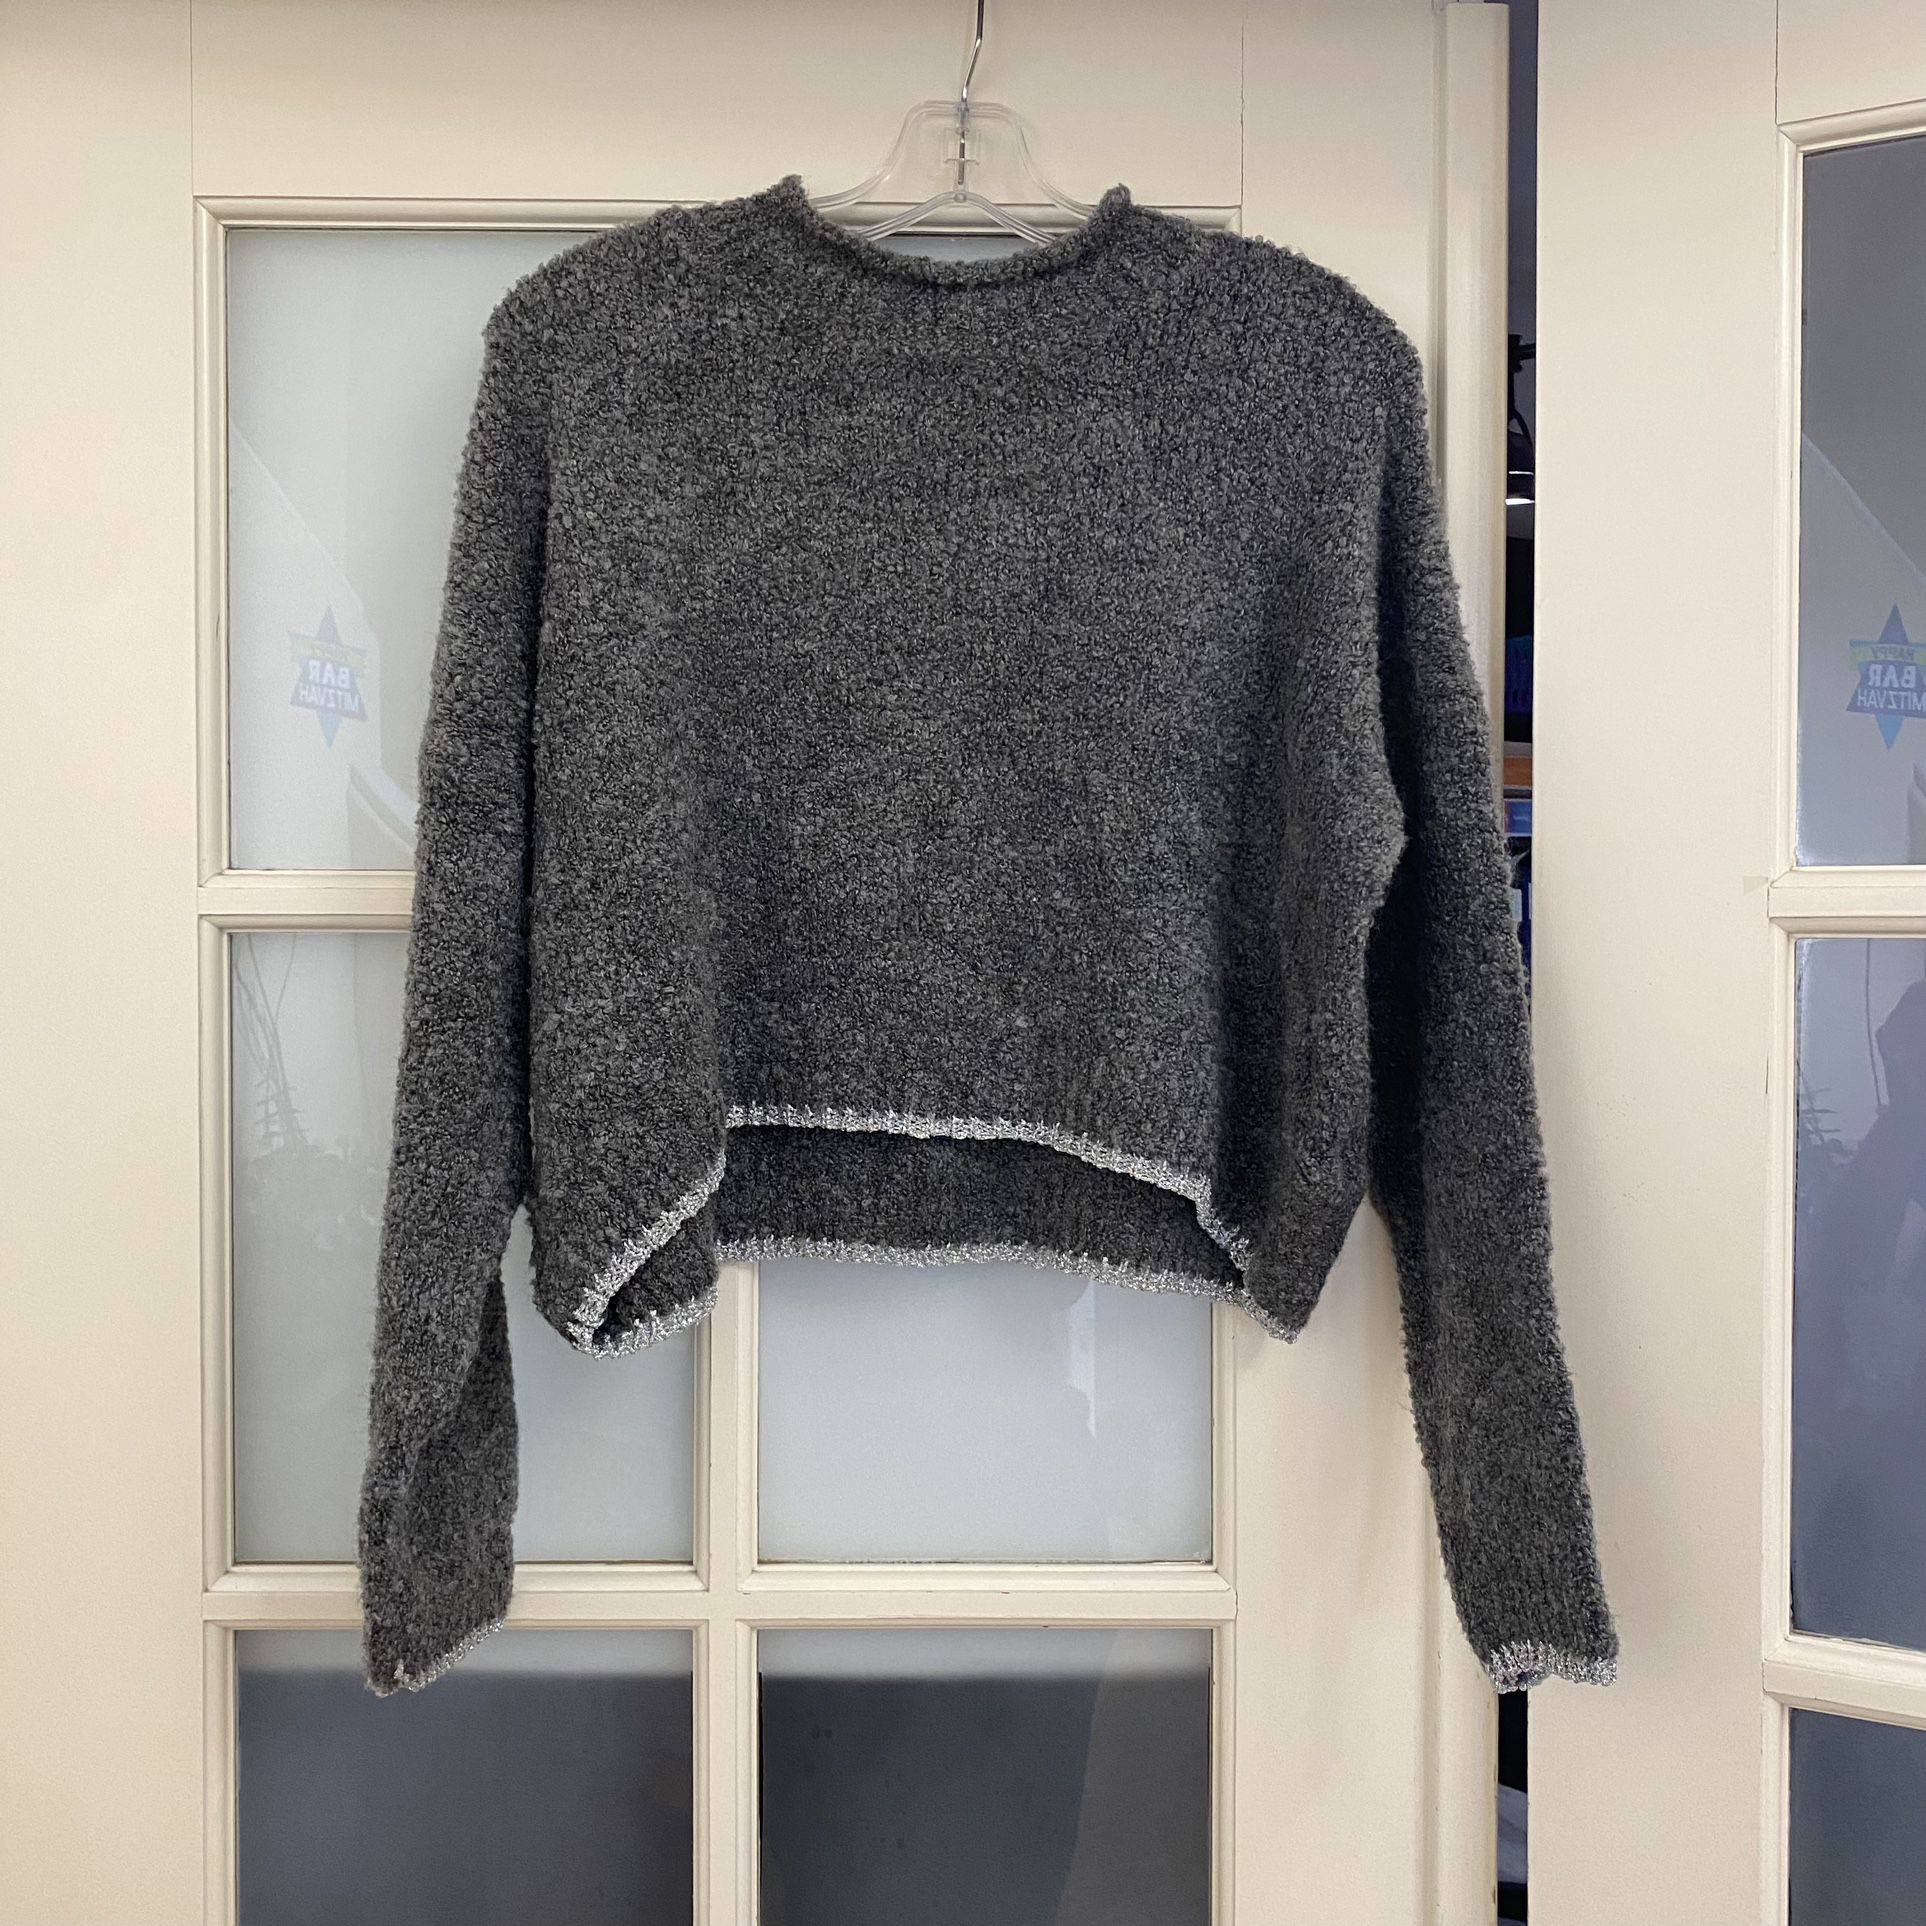 Soft Urban Outfitters crop sweater,  Medium